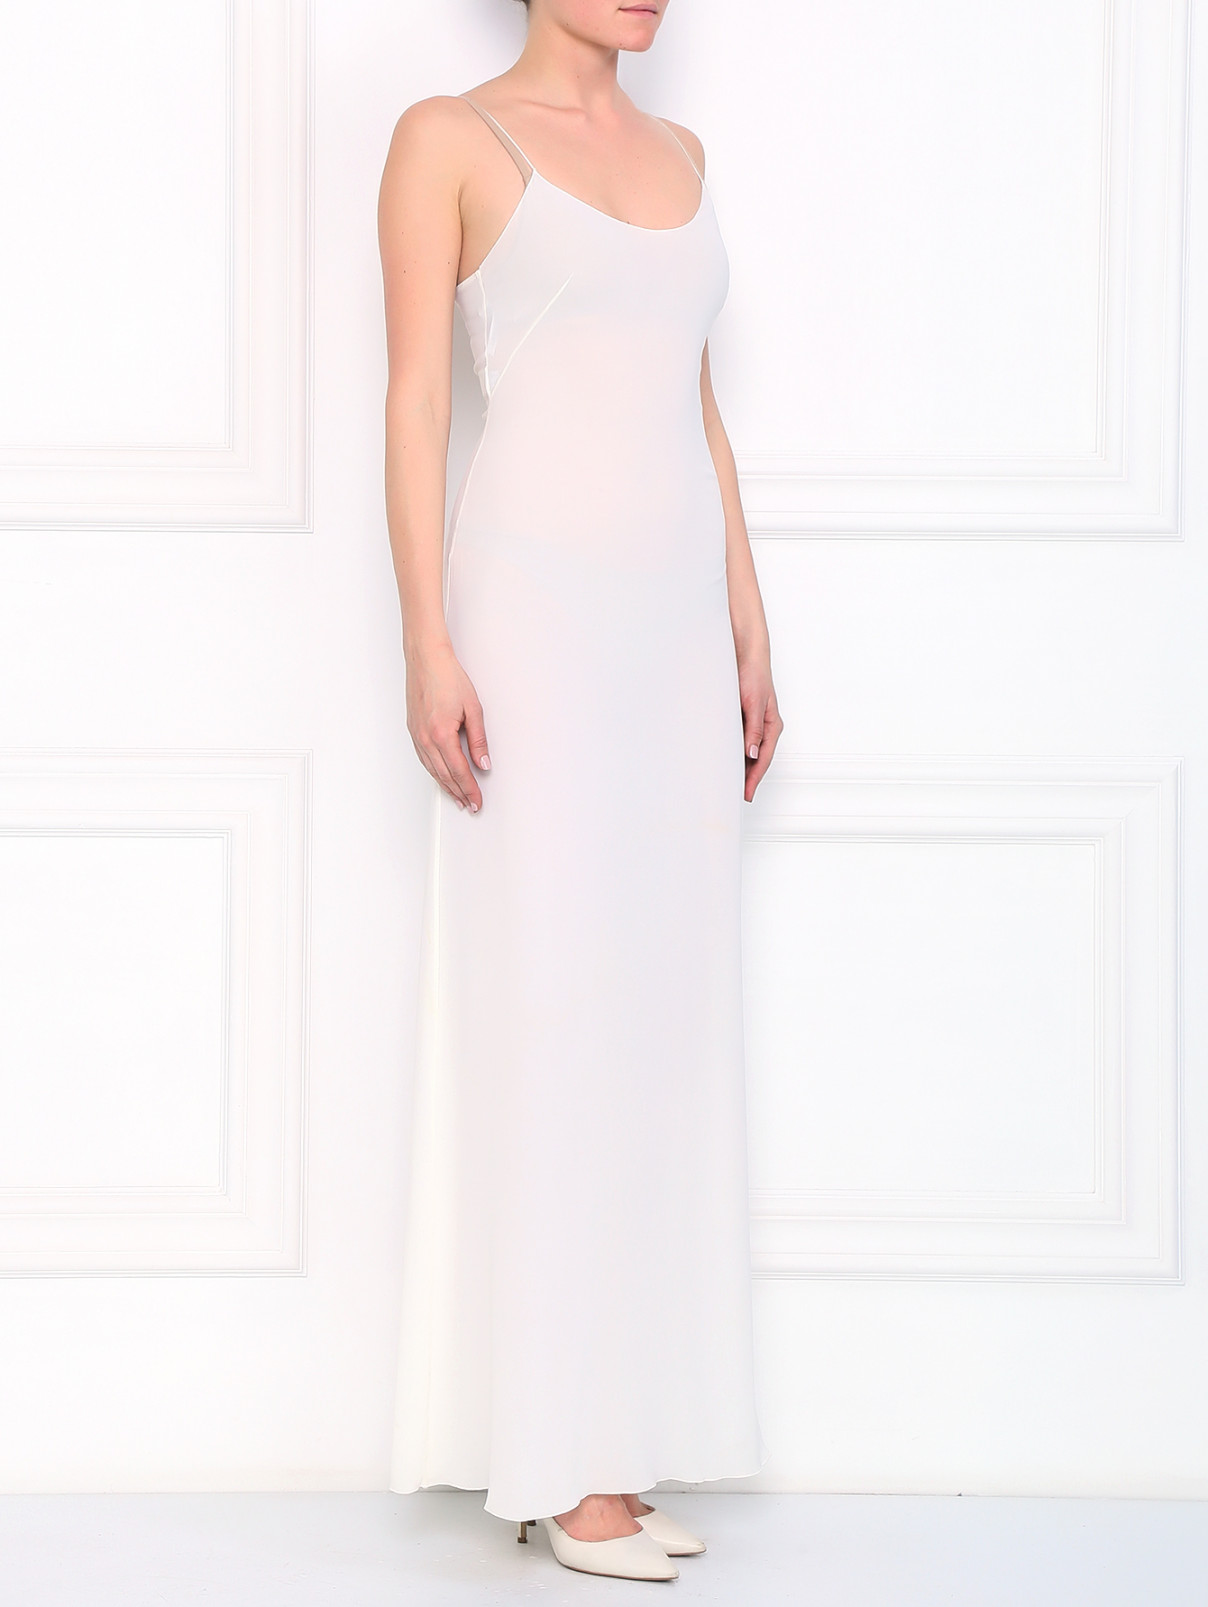 Платье из шелка Alberta Ferretti  –  Модель Общий вид  – Цвет:  Белый